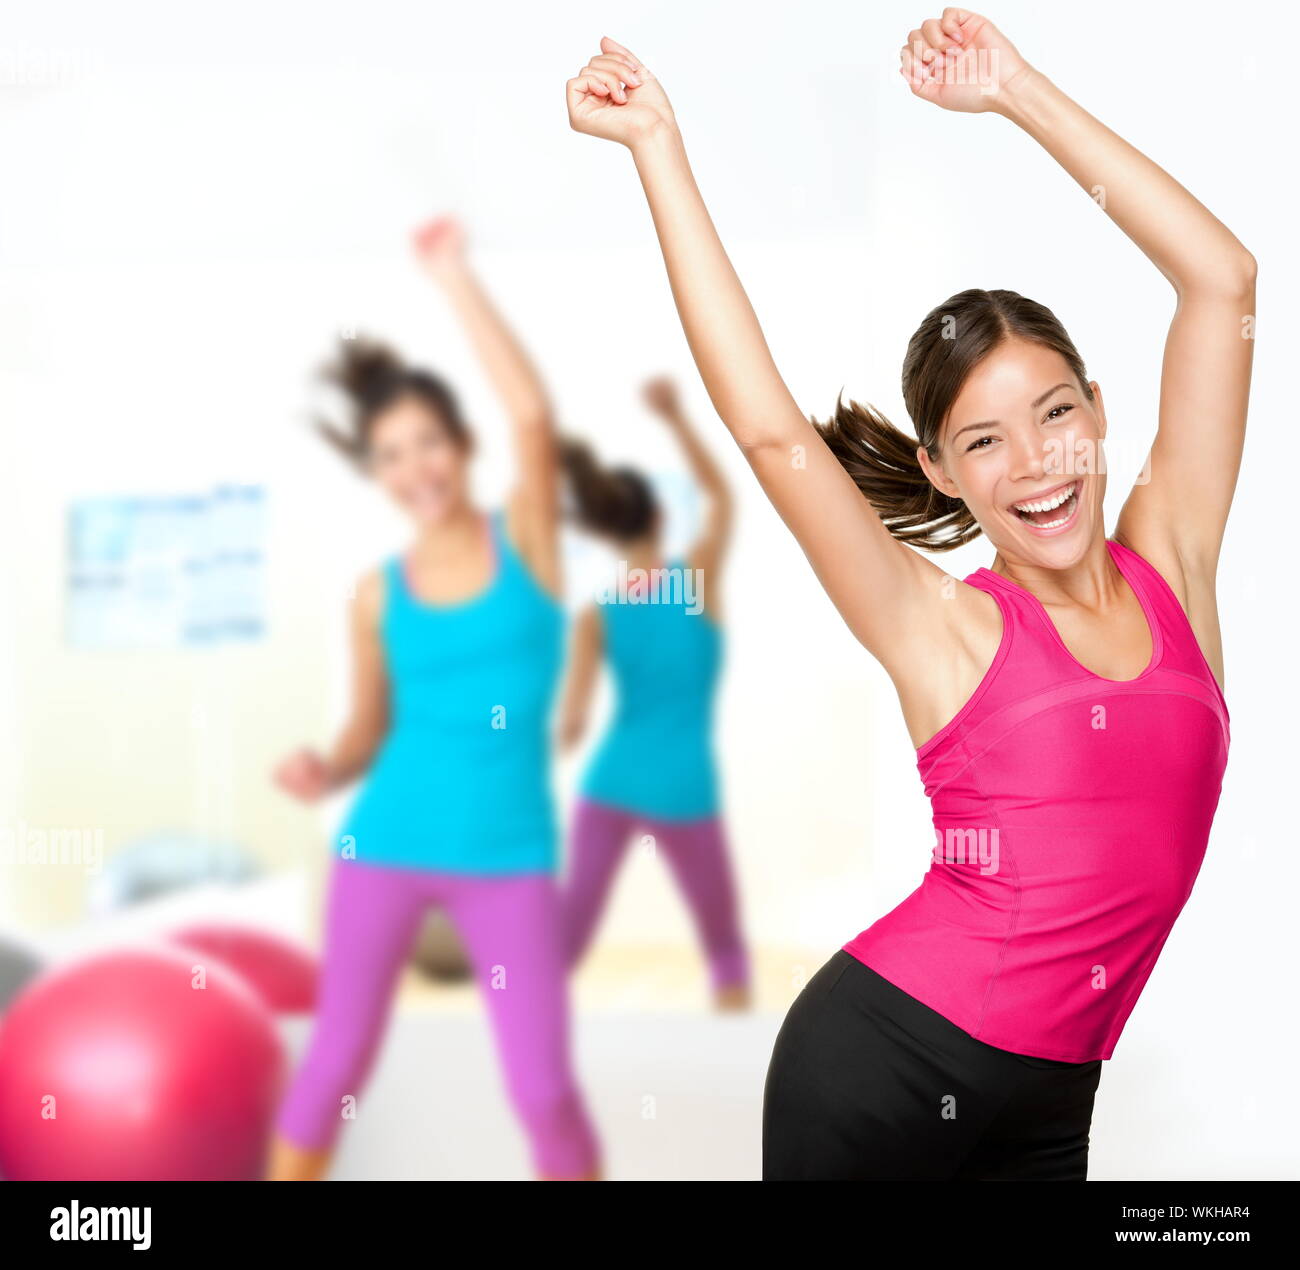 Clase de zumba Dance Fitness gimnasia aeróbica. Mujeres bailando feliz  enérgico gym fitness en clase Fotografía de stock - Alamy